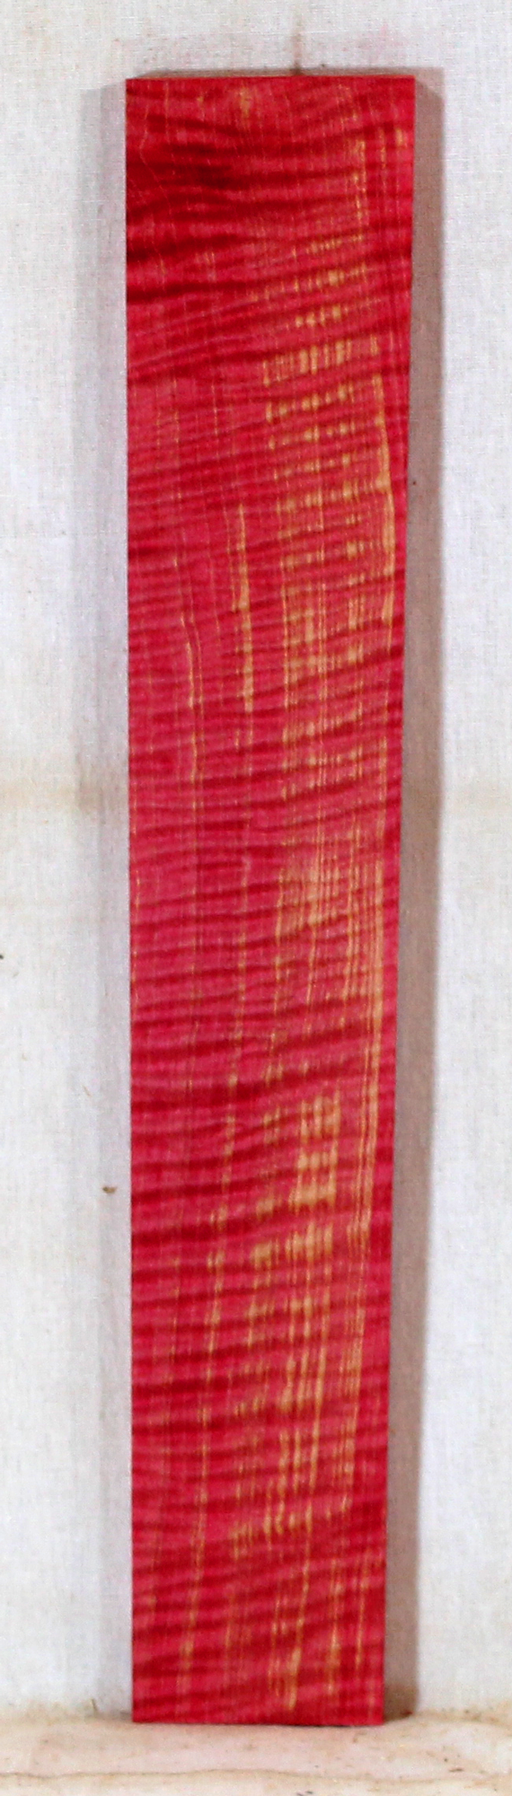 Maple Ukulele Red Fingerboard Stabilized (EH67)